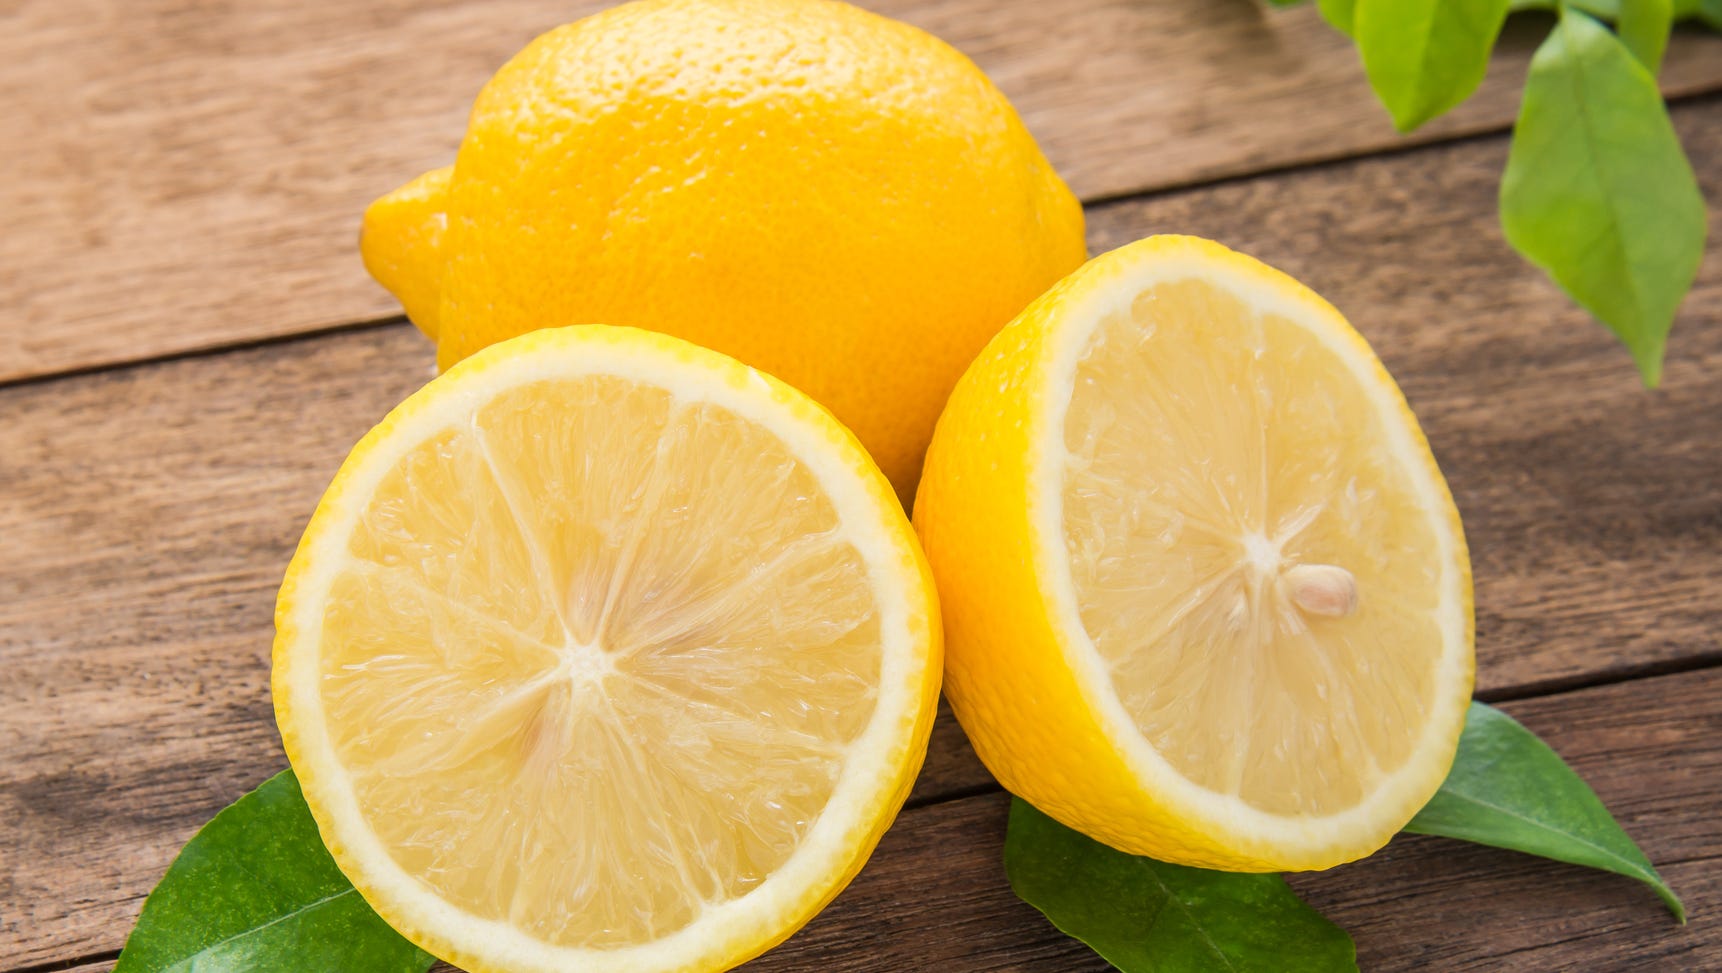 8 kitchen hacks using lemons